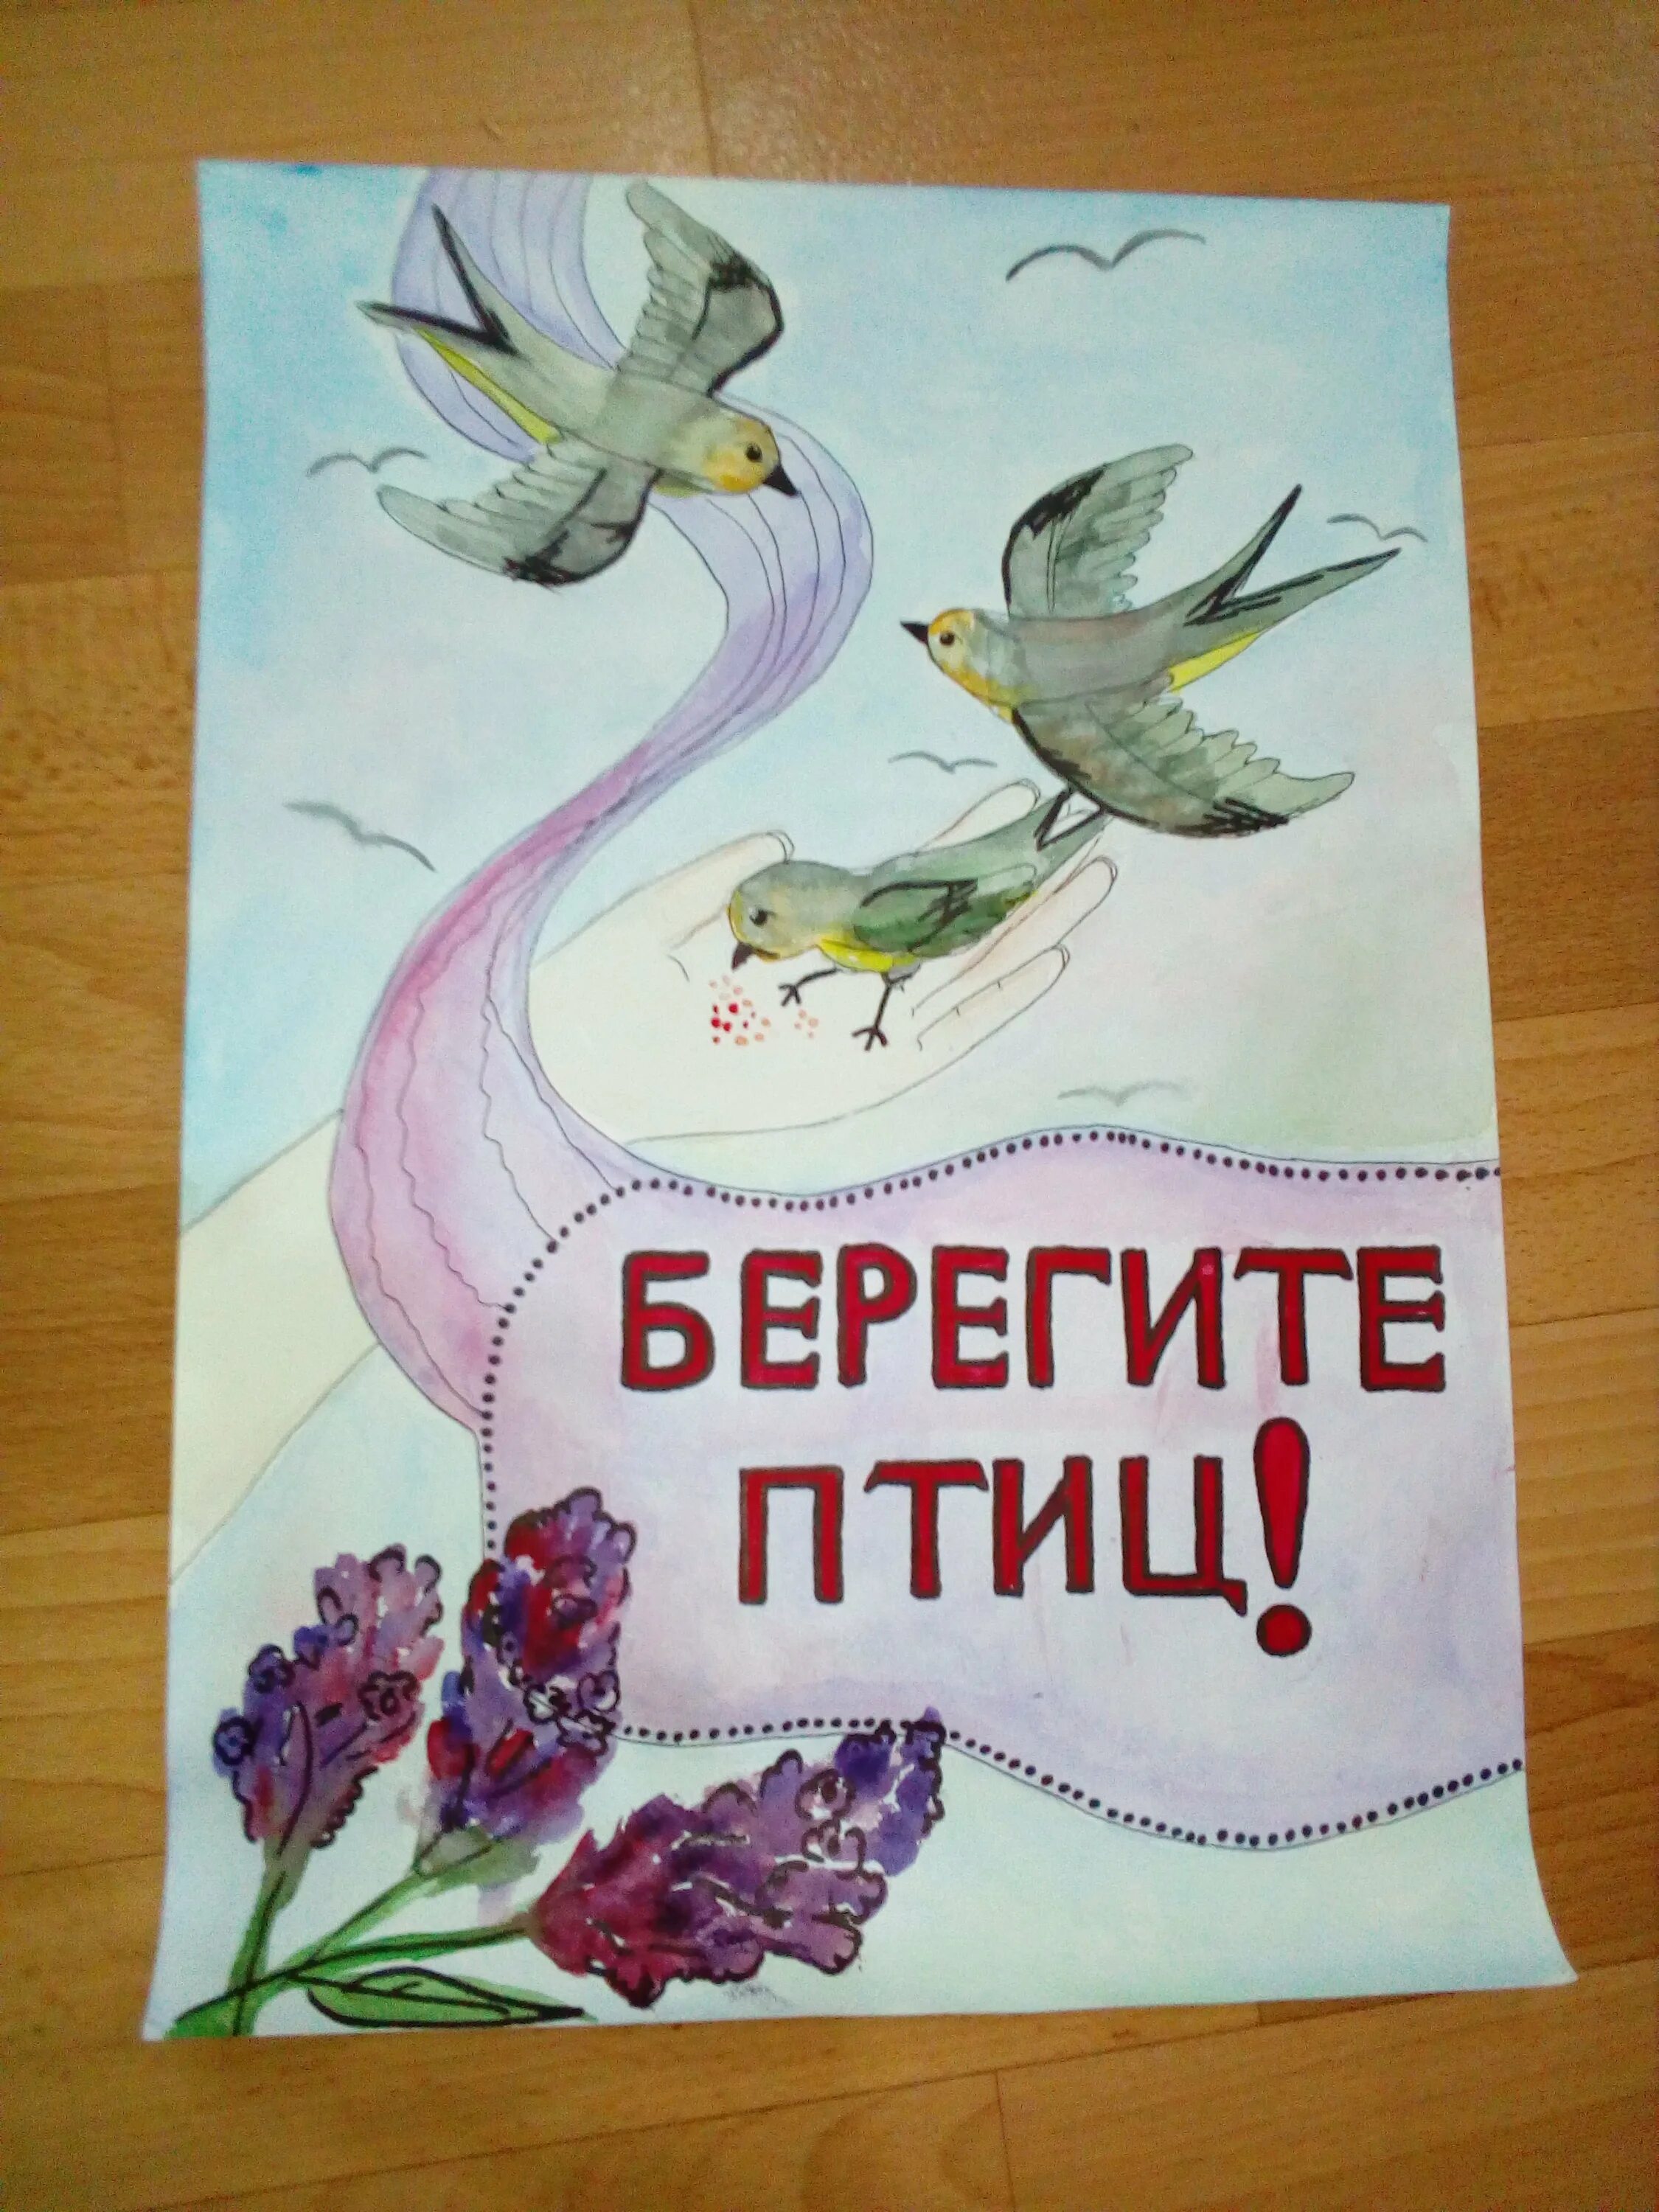 Рисунок берегите птиц. Плакат берегите птиц. Плакат в защиту птиц. Плакат на тему берегите птиц. Берегите птиц рисунок.